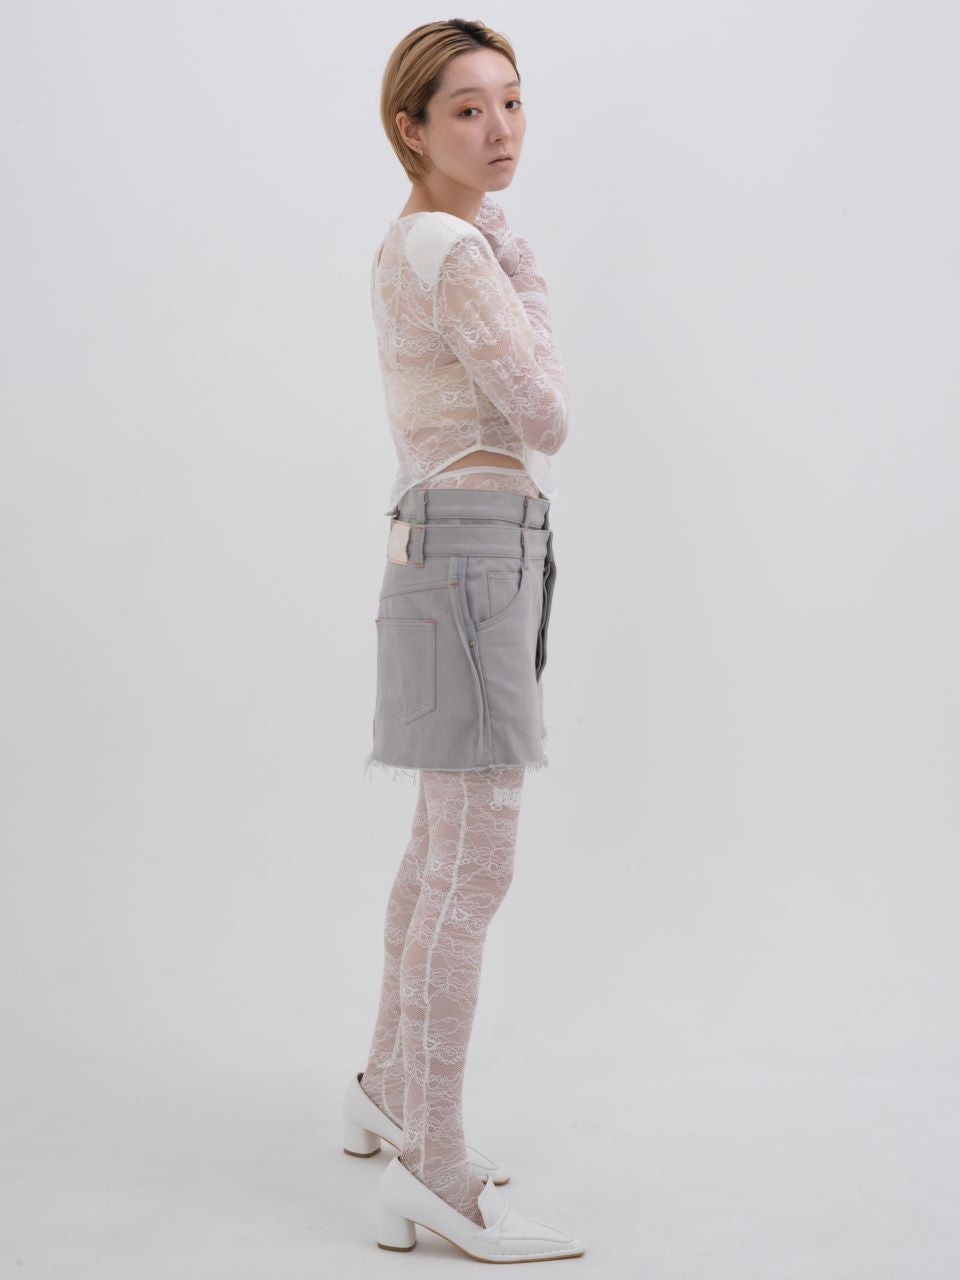 neithneith. denim skirt with legcover